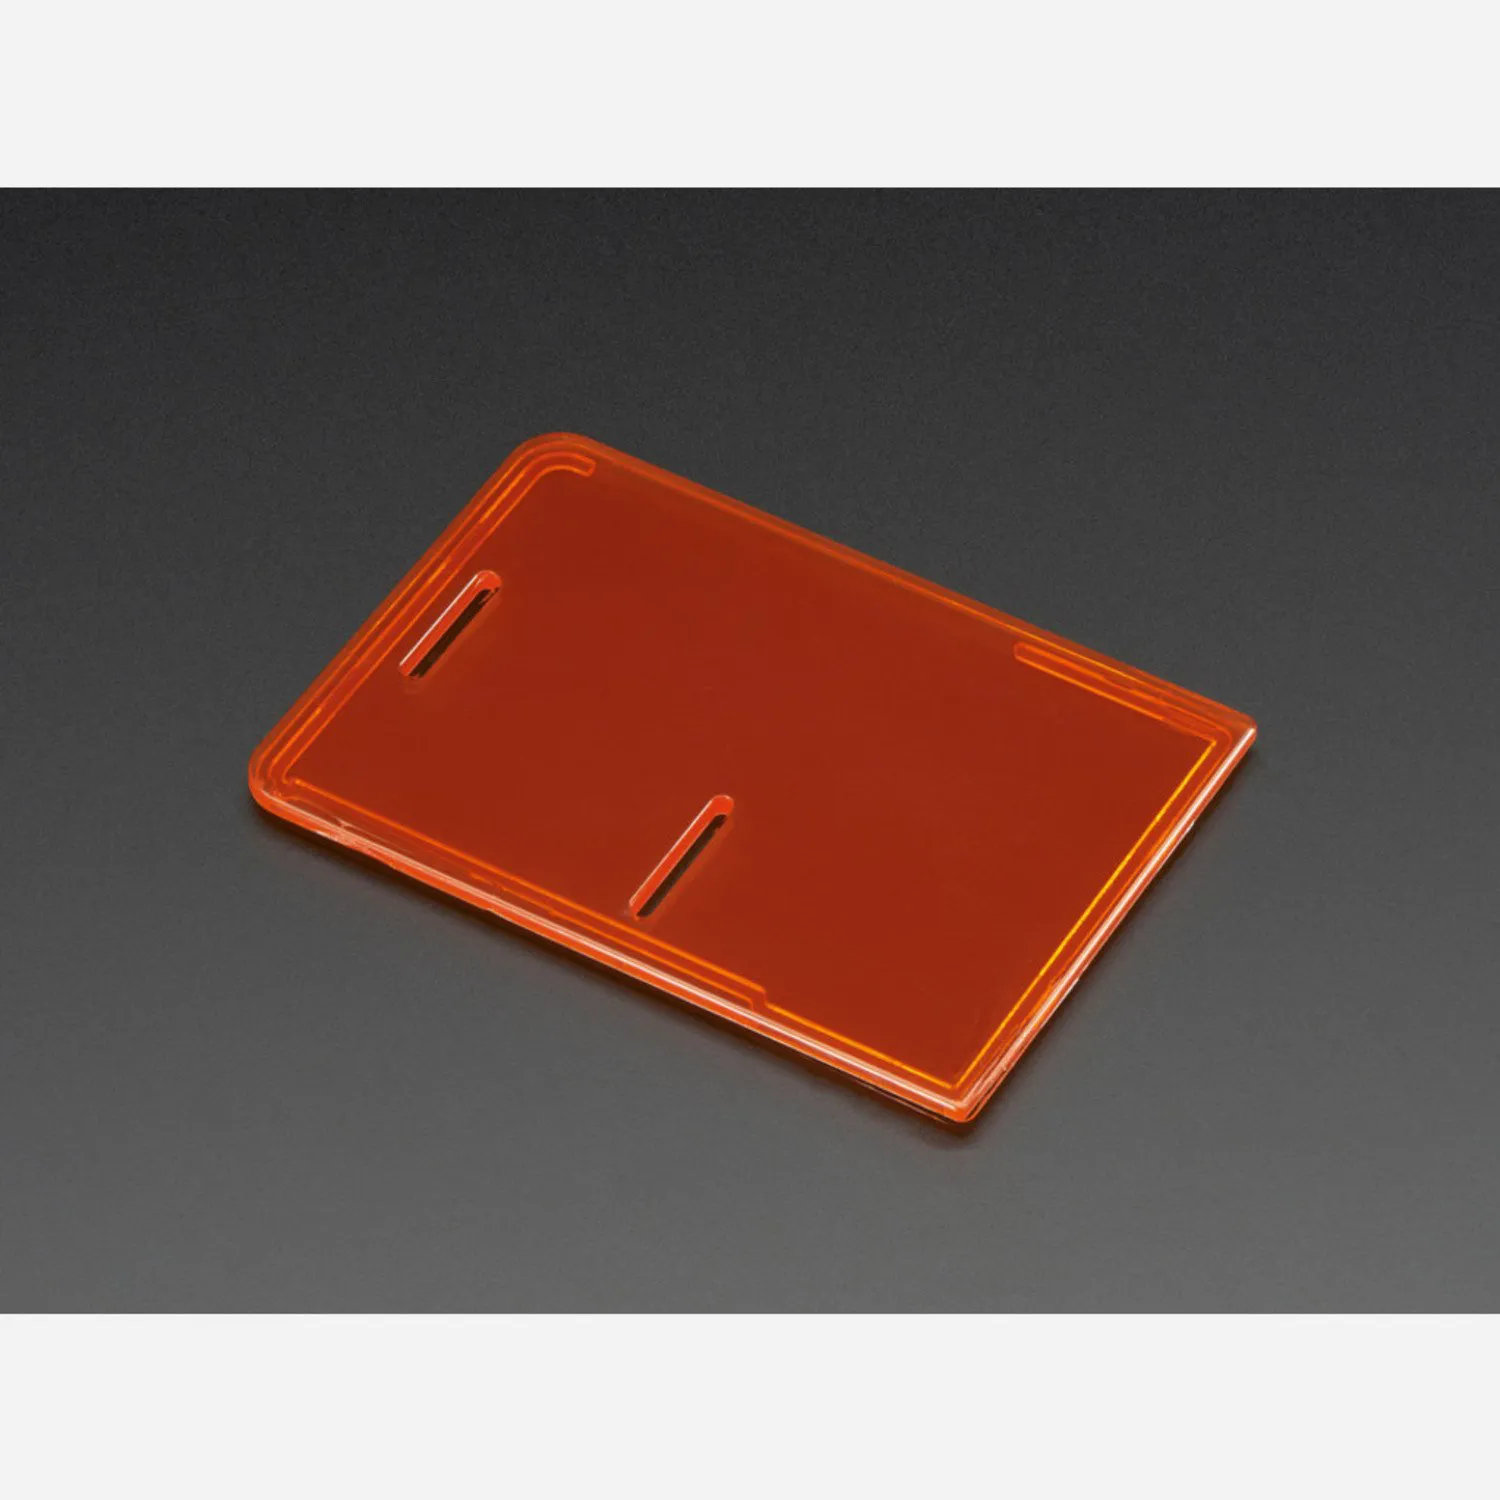 Photo of Raspberry Pi Model B+ / Pi 2 / Pi 3 Case Lid - Orange